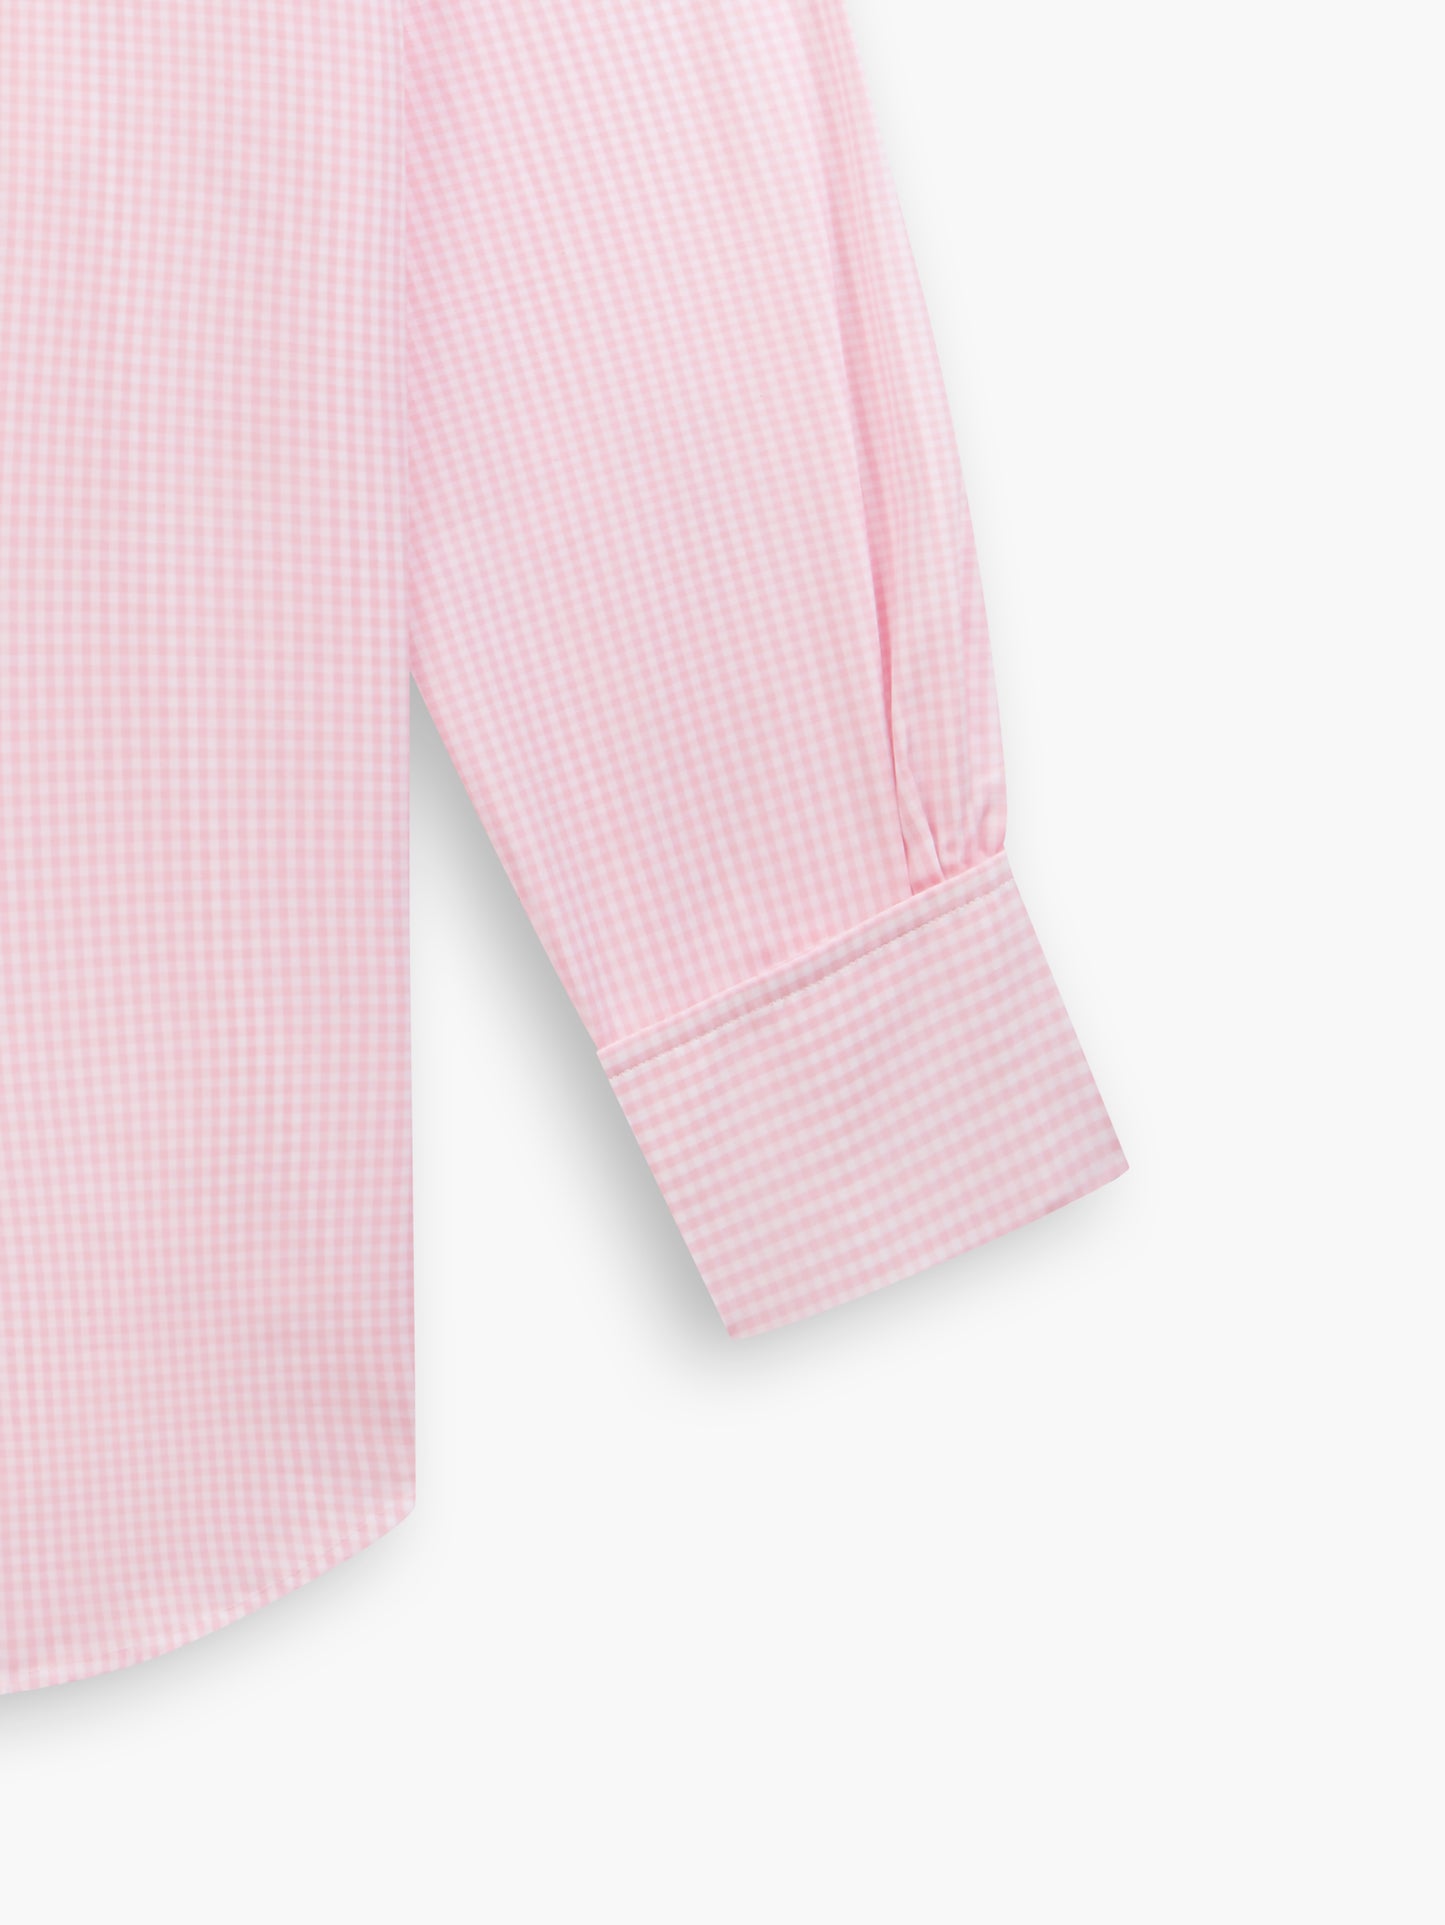 Pink Small Gingham Poplin Regular Fit Double Cuff Classic Collar Shirt